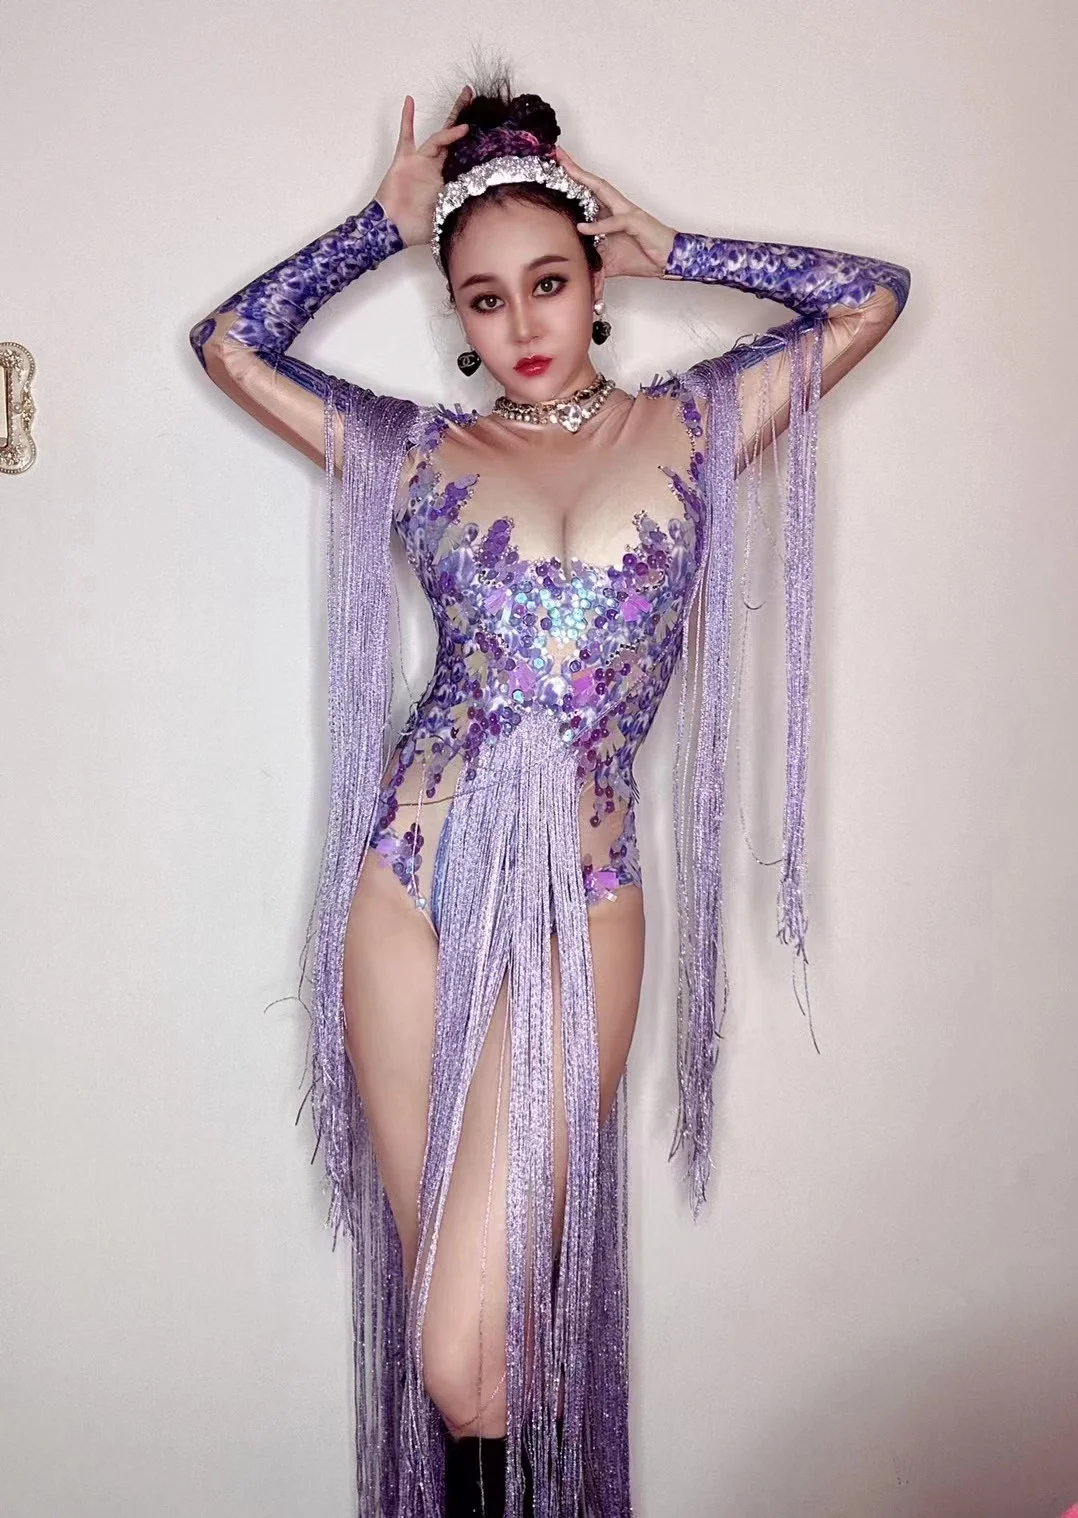 

Shiny Purple Fringe Bodysuit Gogo Dancer Performance Clothing Nightclub Female Singer Halloween Christmas Party Outfits